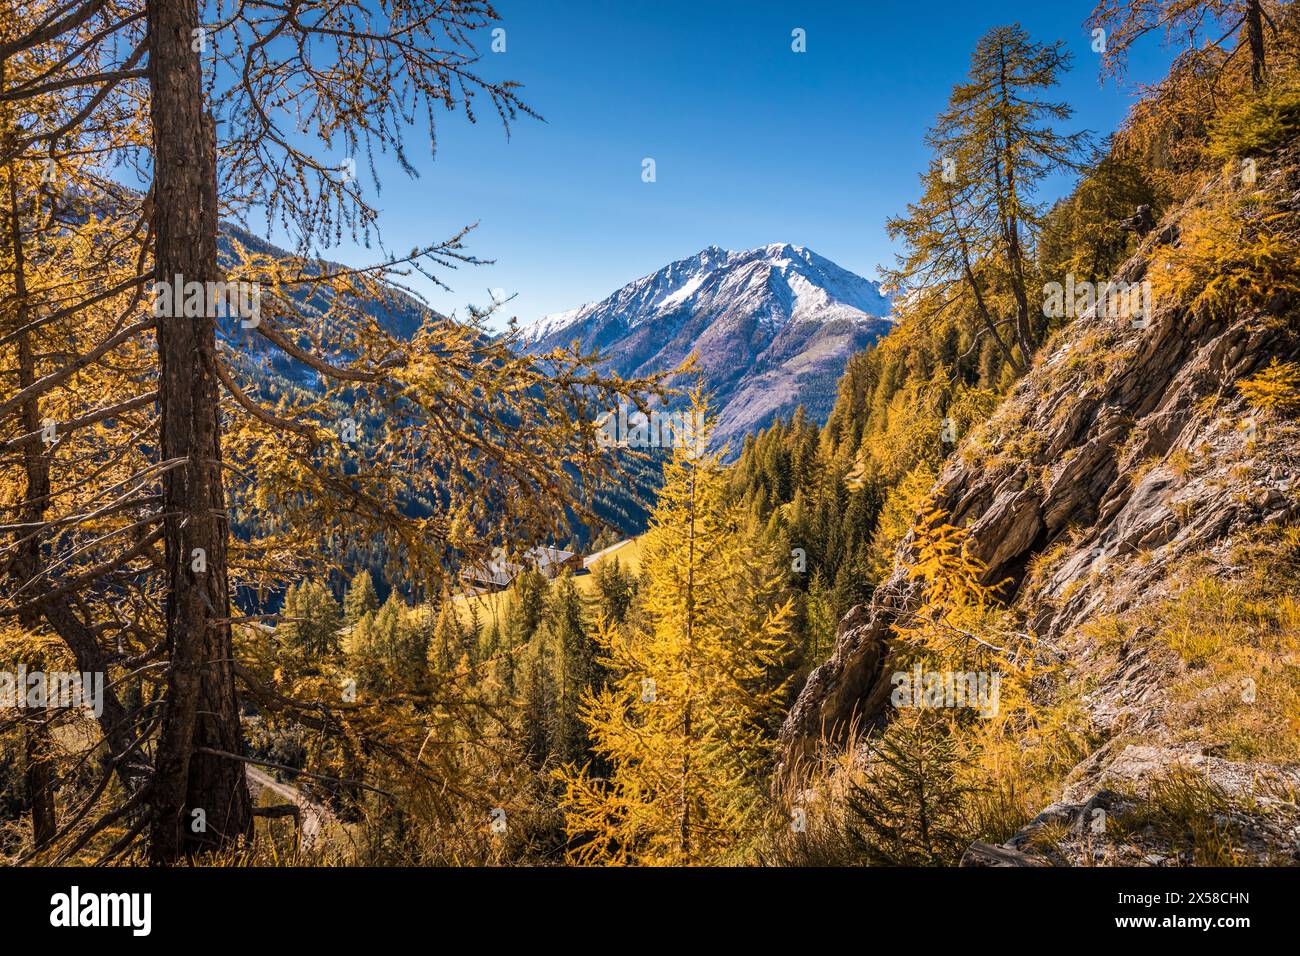 Geographie / Reise, Österreich, Tirol, Kals am Großglockner (Peak), ADDITIONAL-RIGHTS-CLEARANCE-INFO-NOT-AVAILABLE Stockfoto